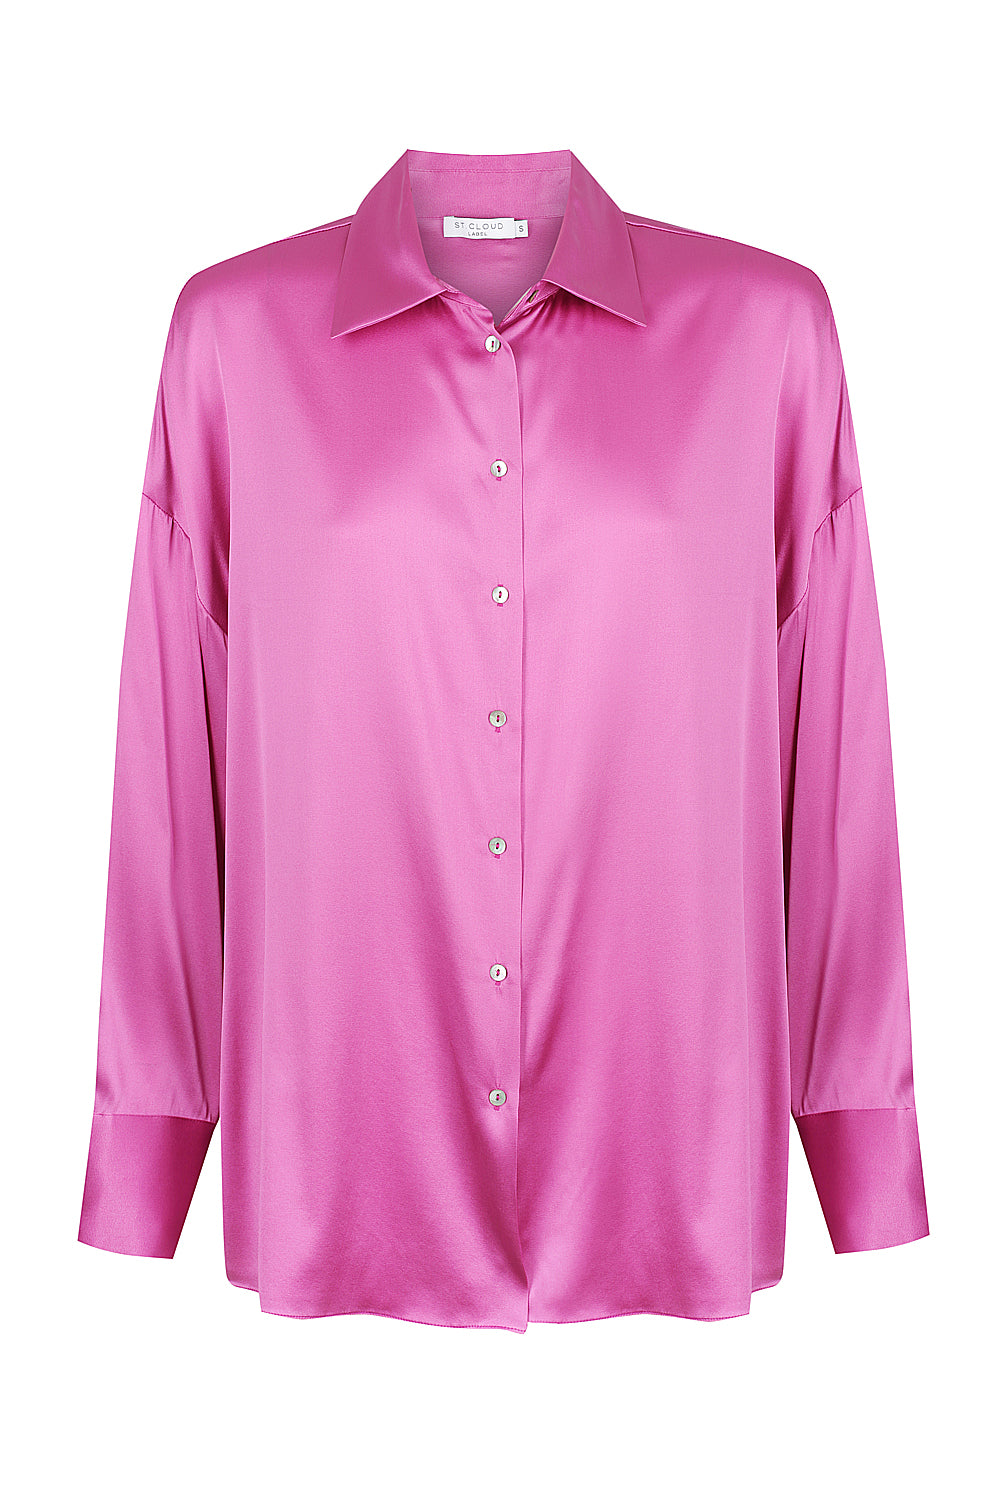 Taos Oversized Shirt - Cerise Pink